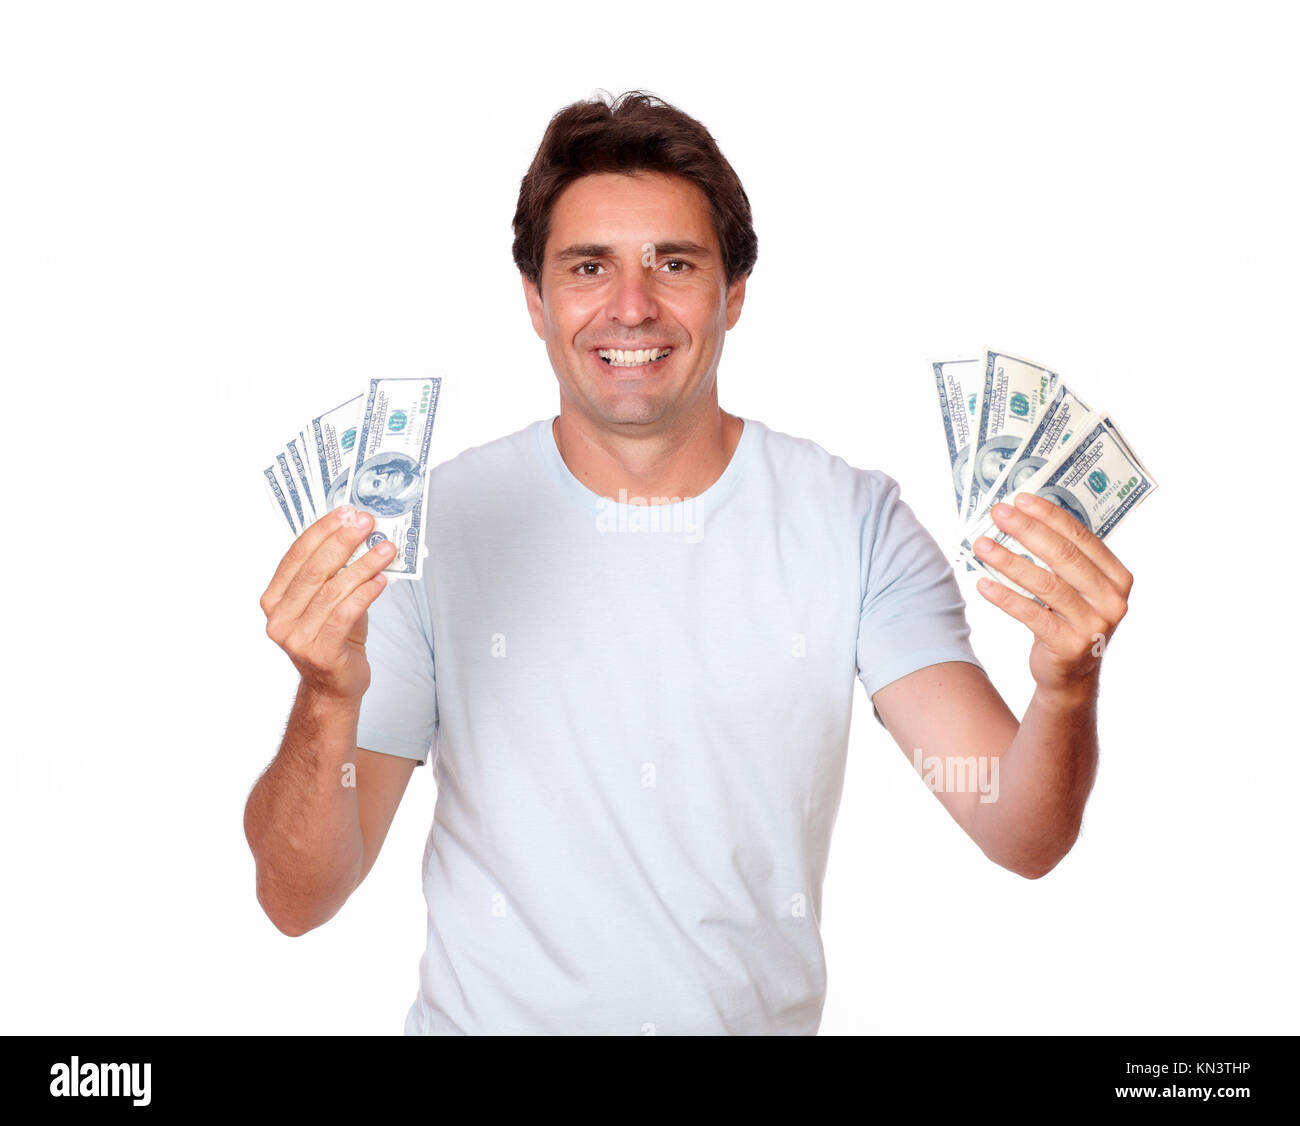 Portrait of a charismatic hispanic adult holding cash money on white background. Stock Photo